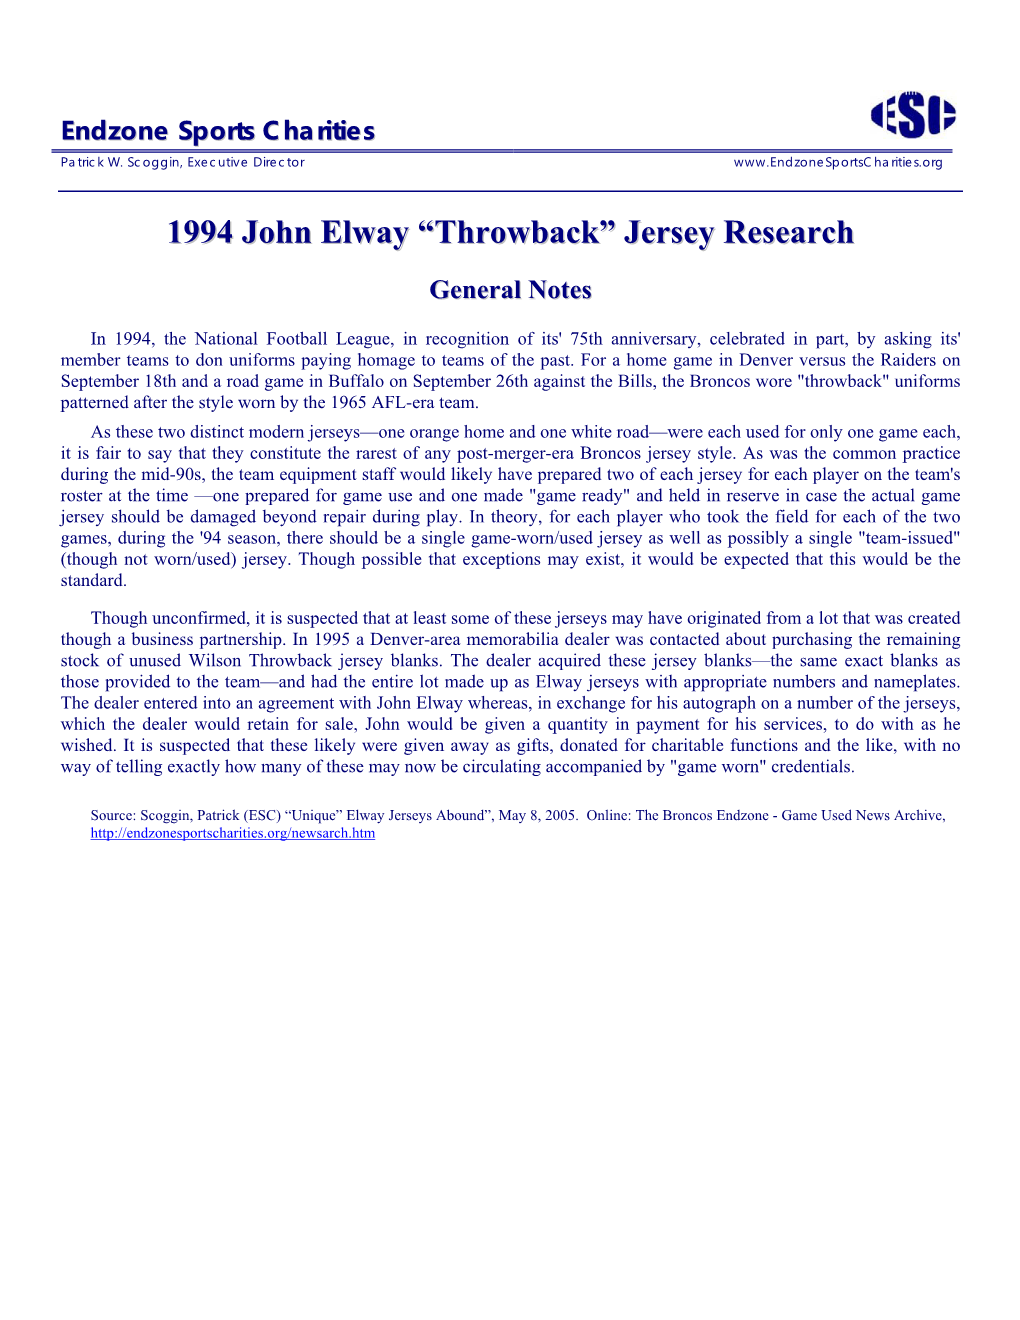 1994 John Elway “Throwback” Jersey Research